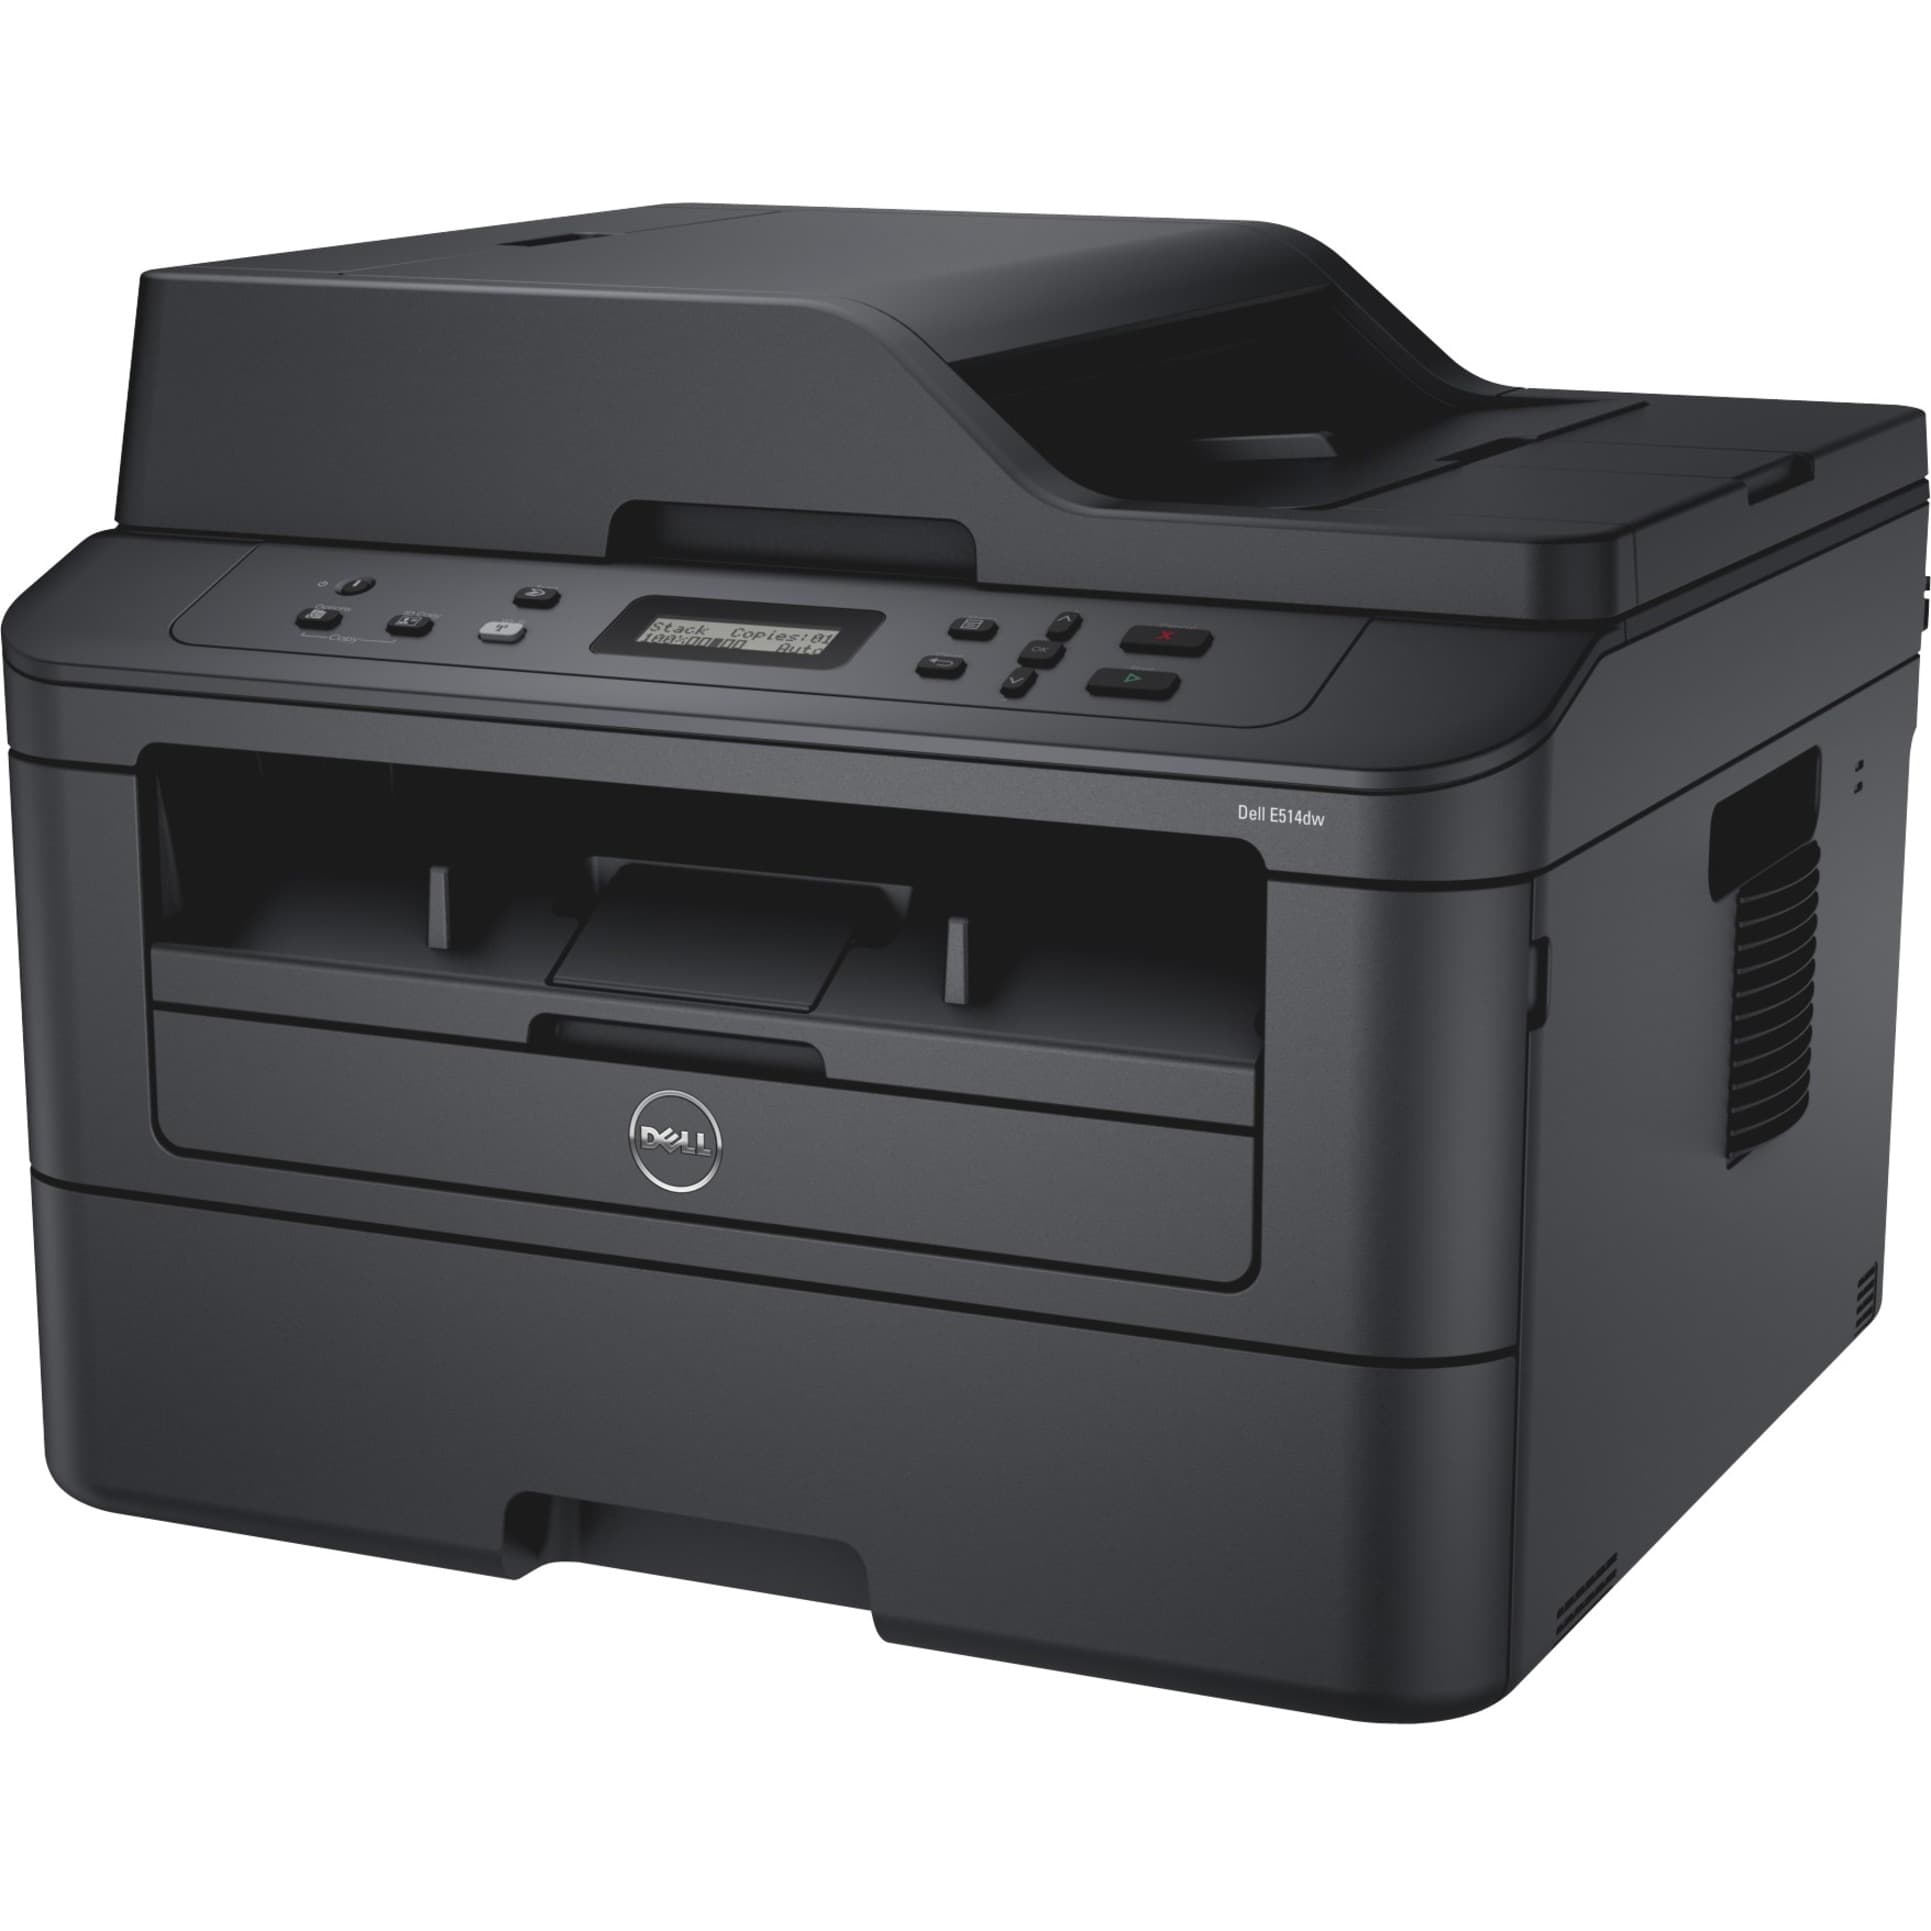 Dell E514dw toner cartridges' printer